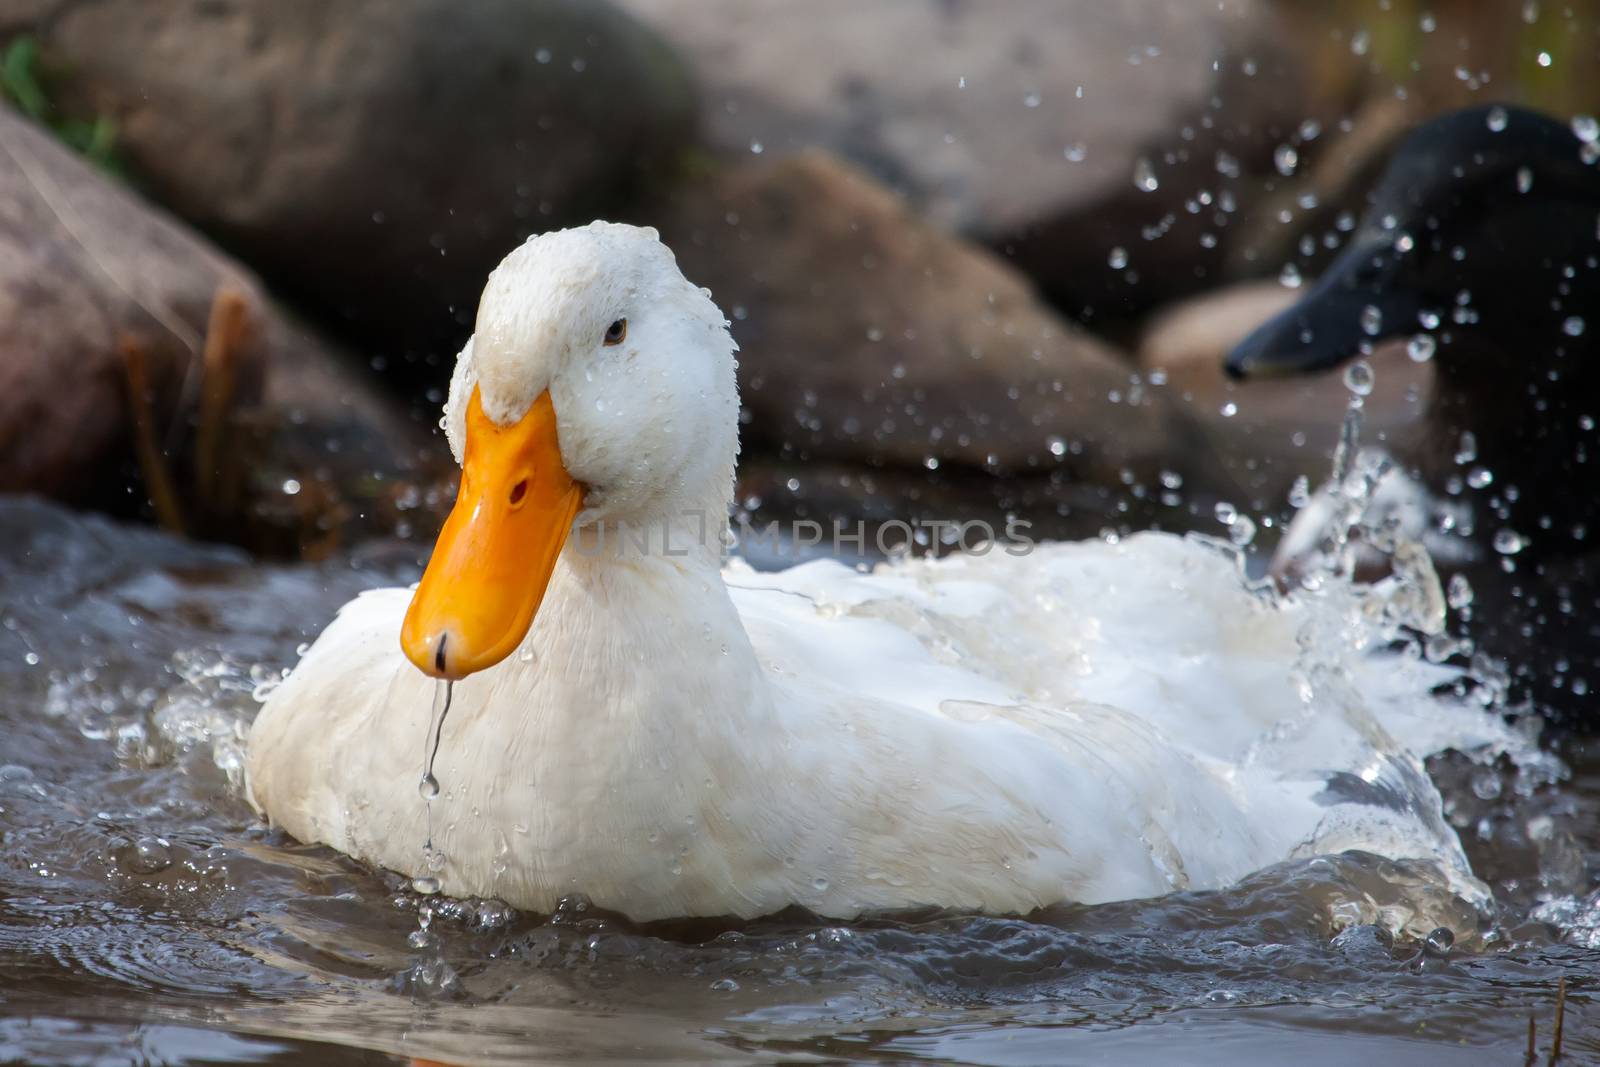 White duck splashing near rocks in a lake